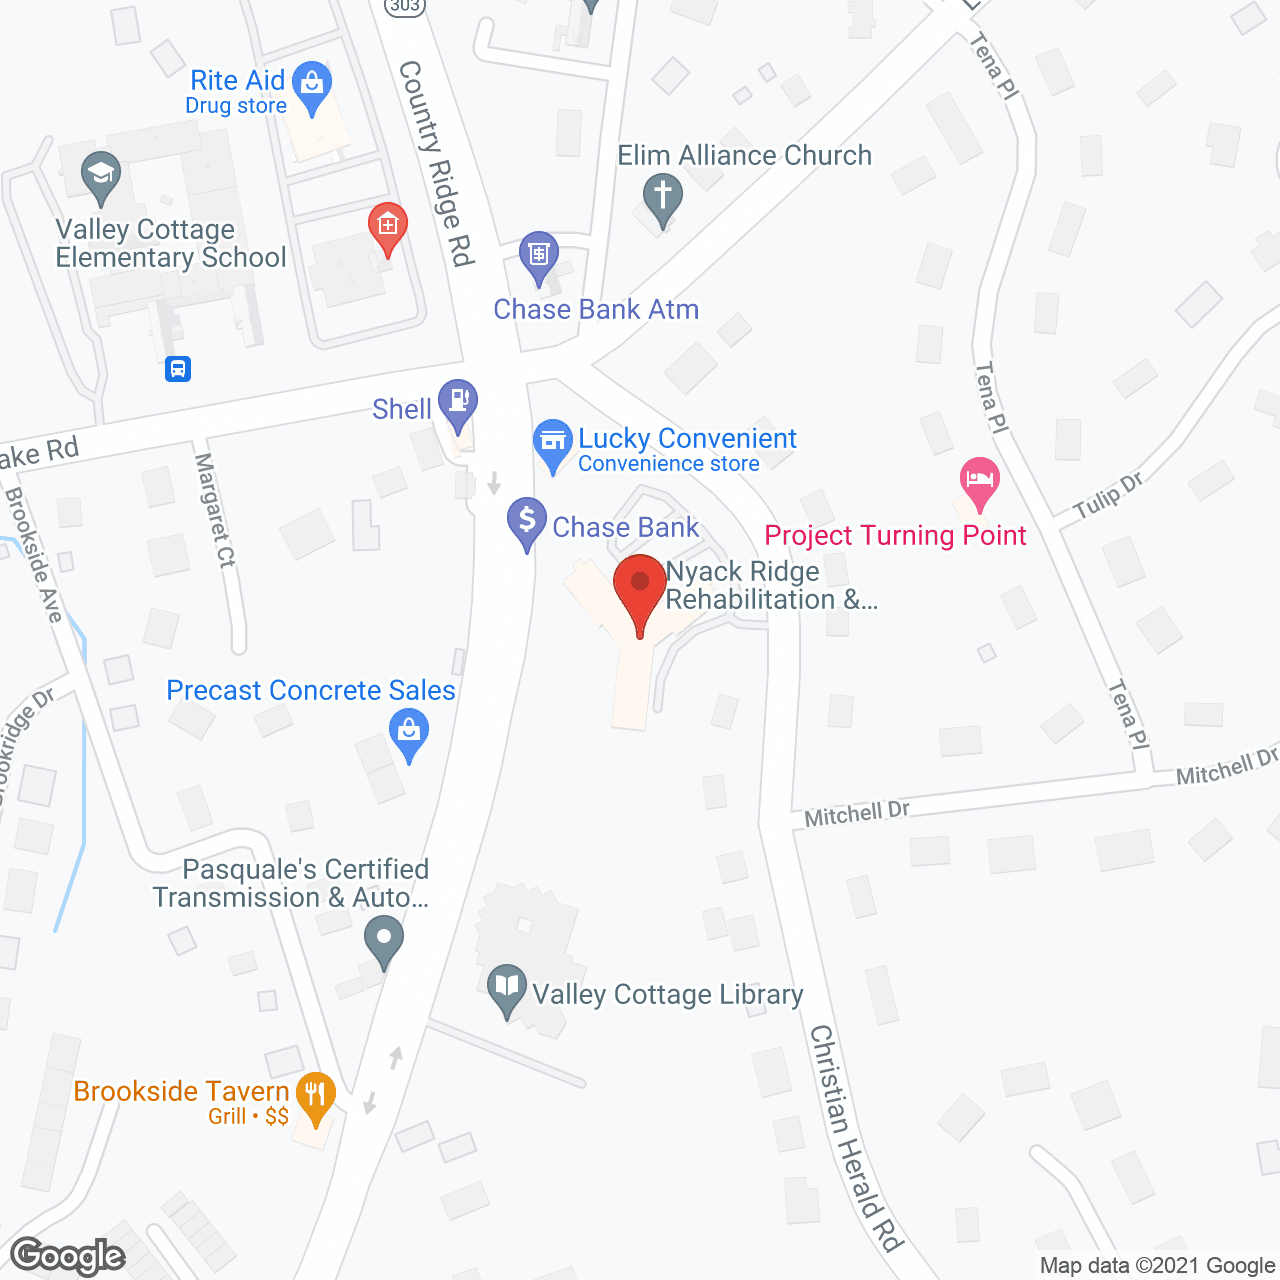 Nyack Ridge Rehabilitation & Nursing Center in google map